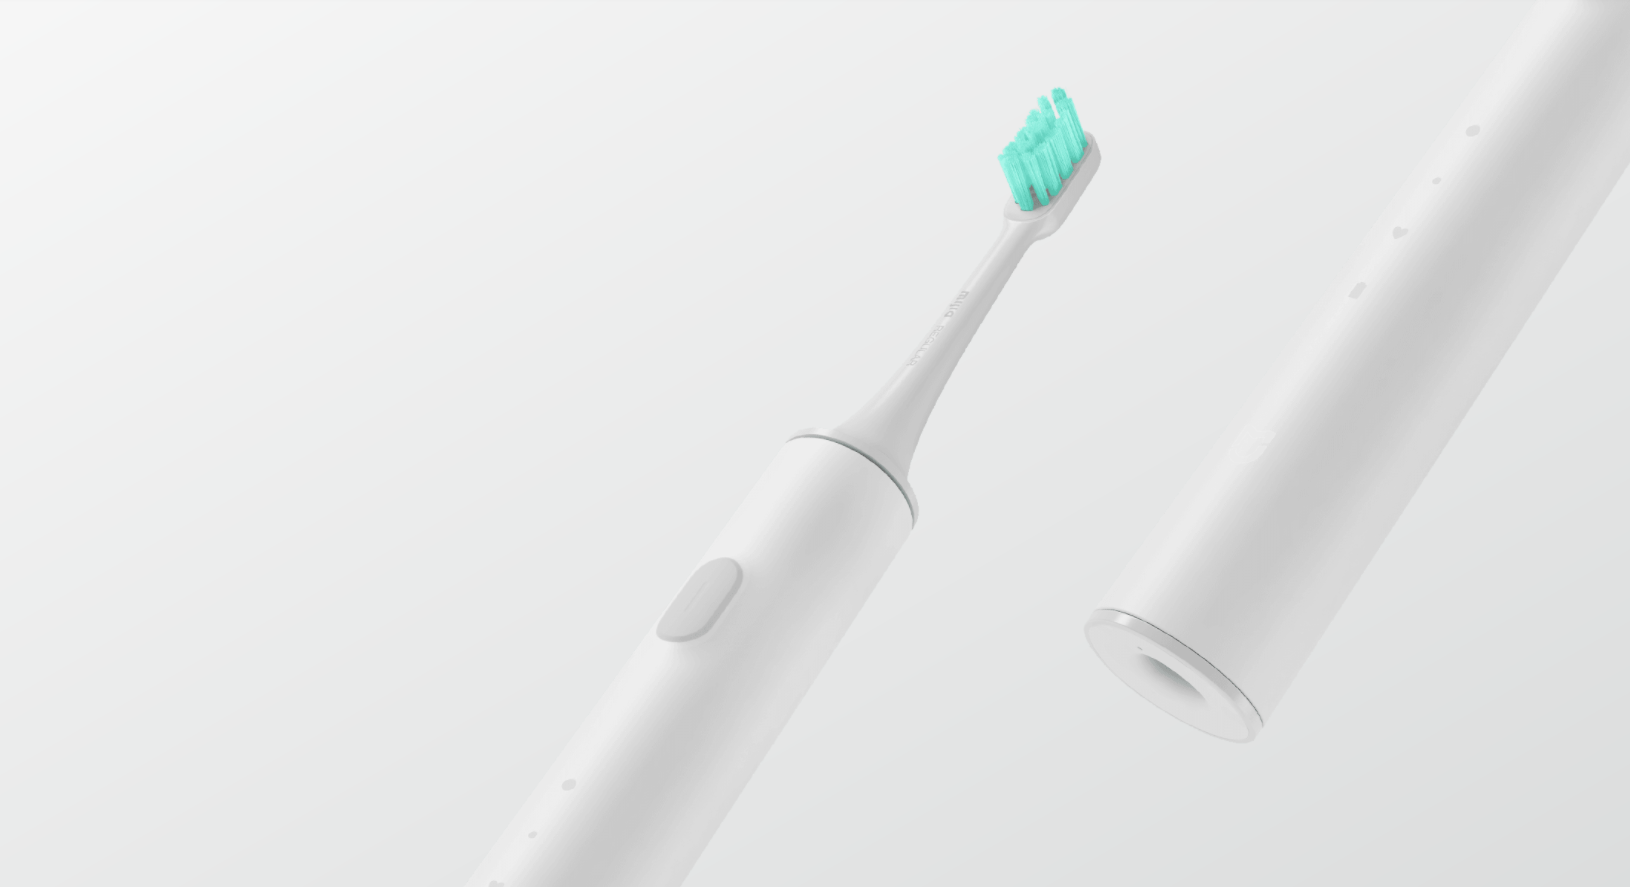 Xiaomi electric toothbrush t302. Электрическая зубная щетка Xiaomi t500. Электрическая зубная щетка Xiaomi t500, белый. Щетка Xiaomi t500 Blue. Xiaomi Mijia зубная щетка.